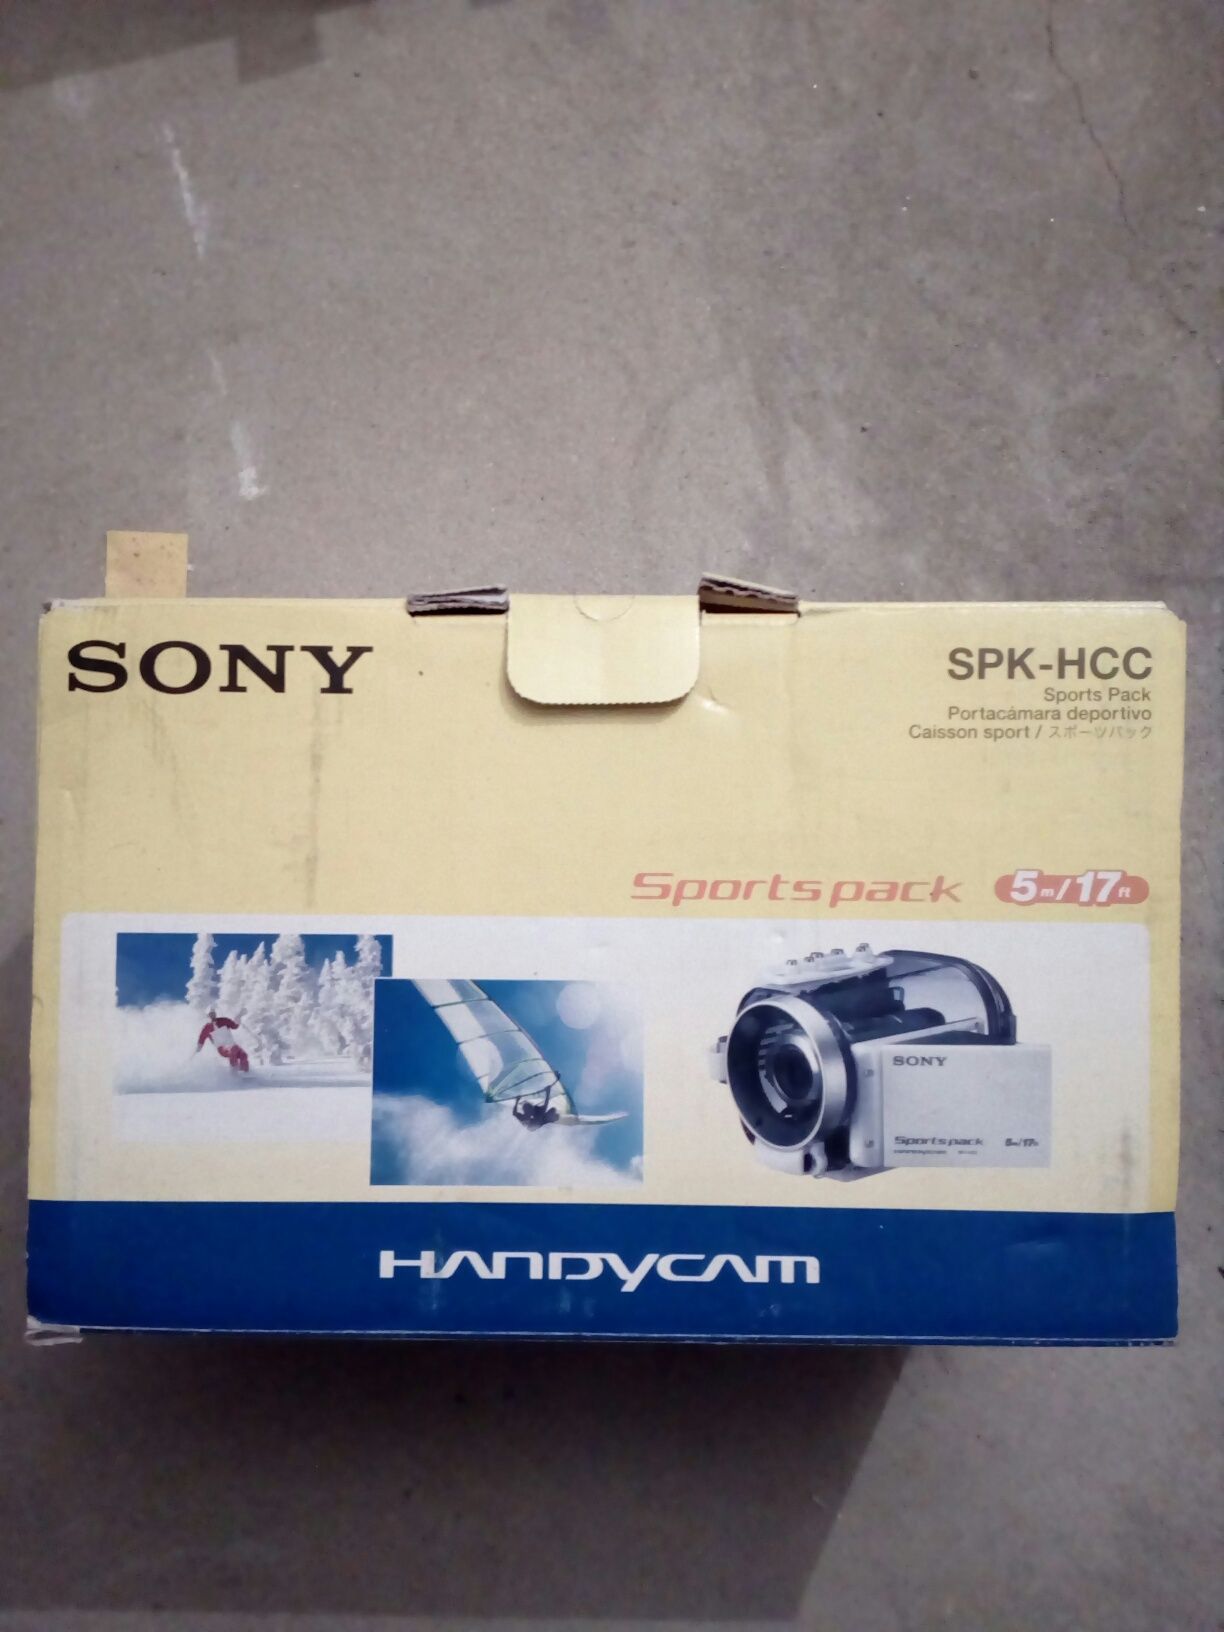 Sony handycam sports pack